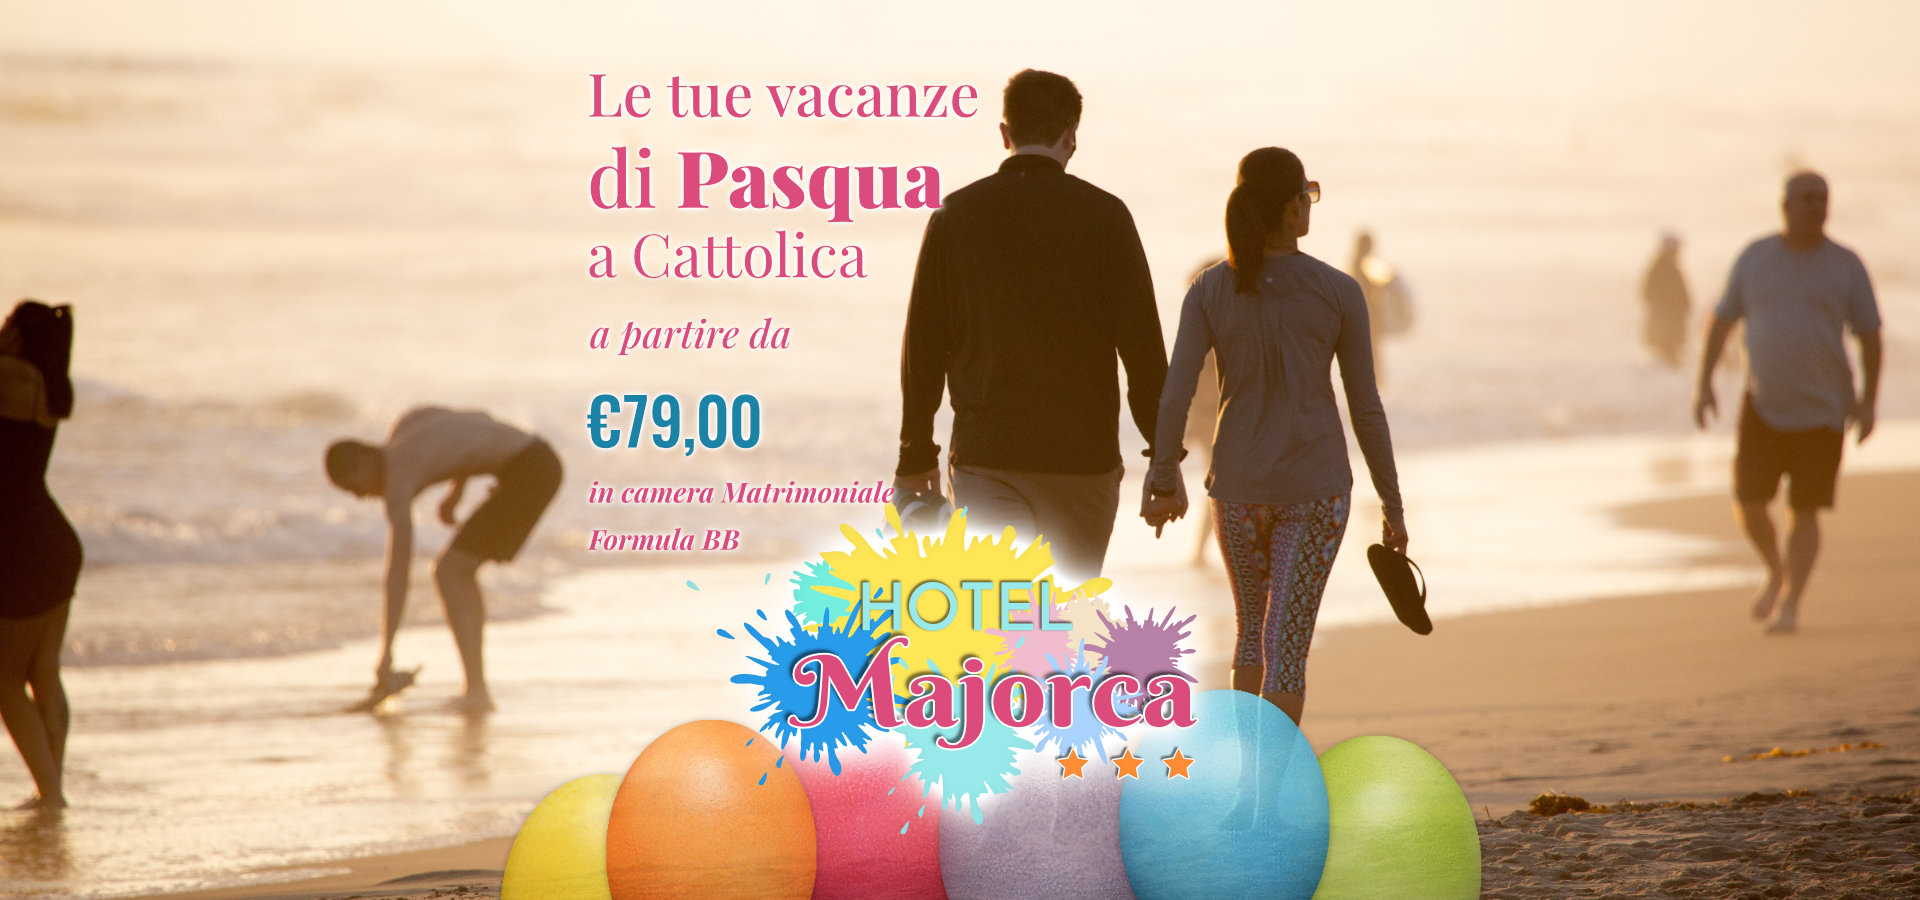 Hotel Majorca - Cattolica